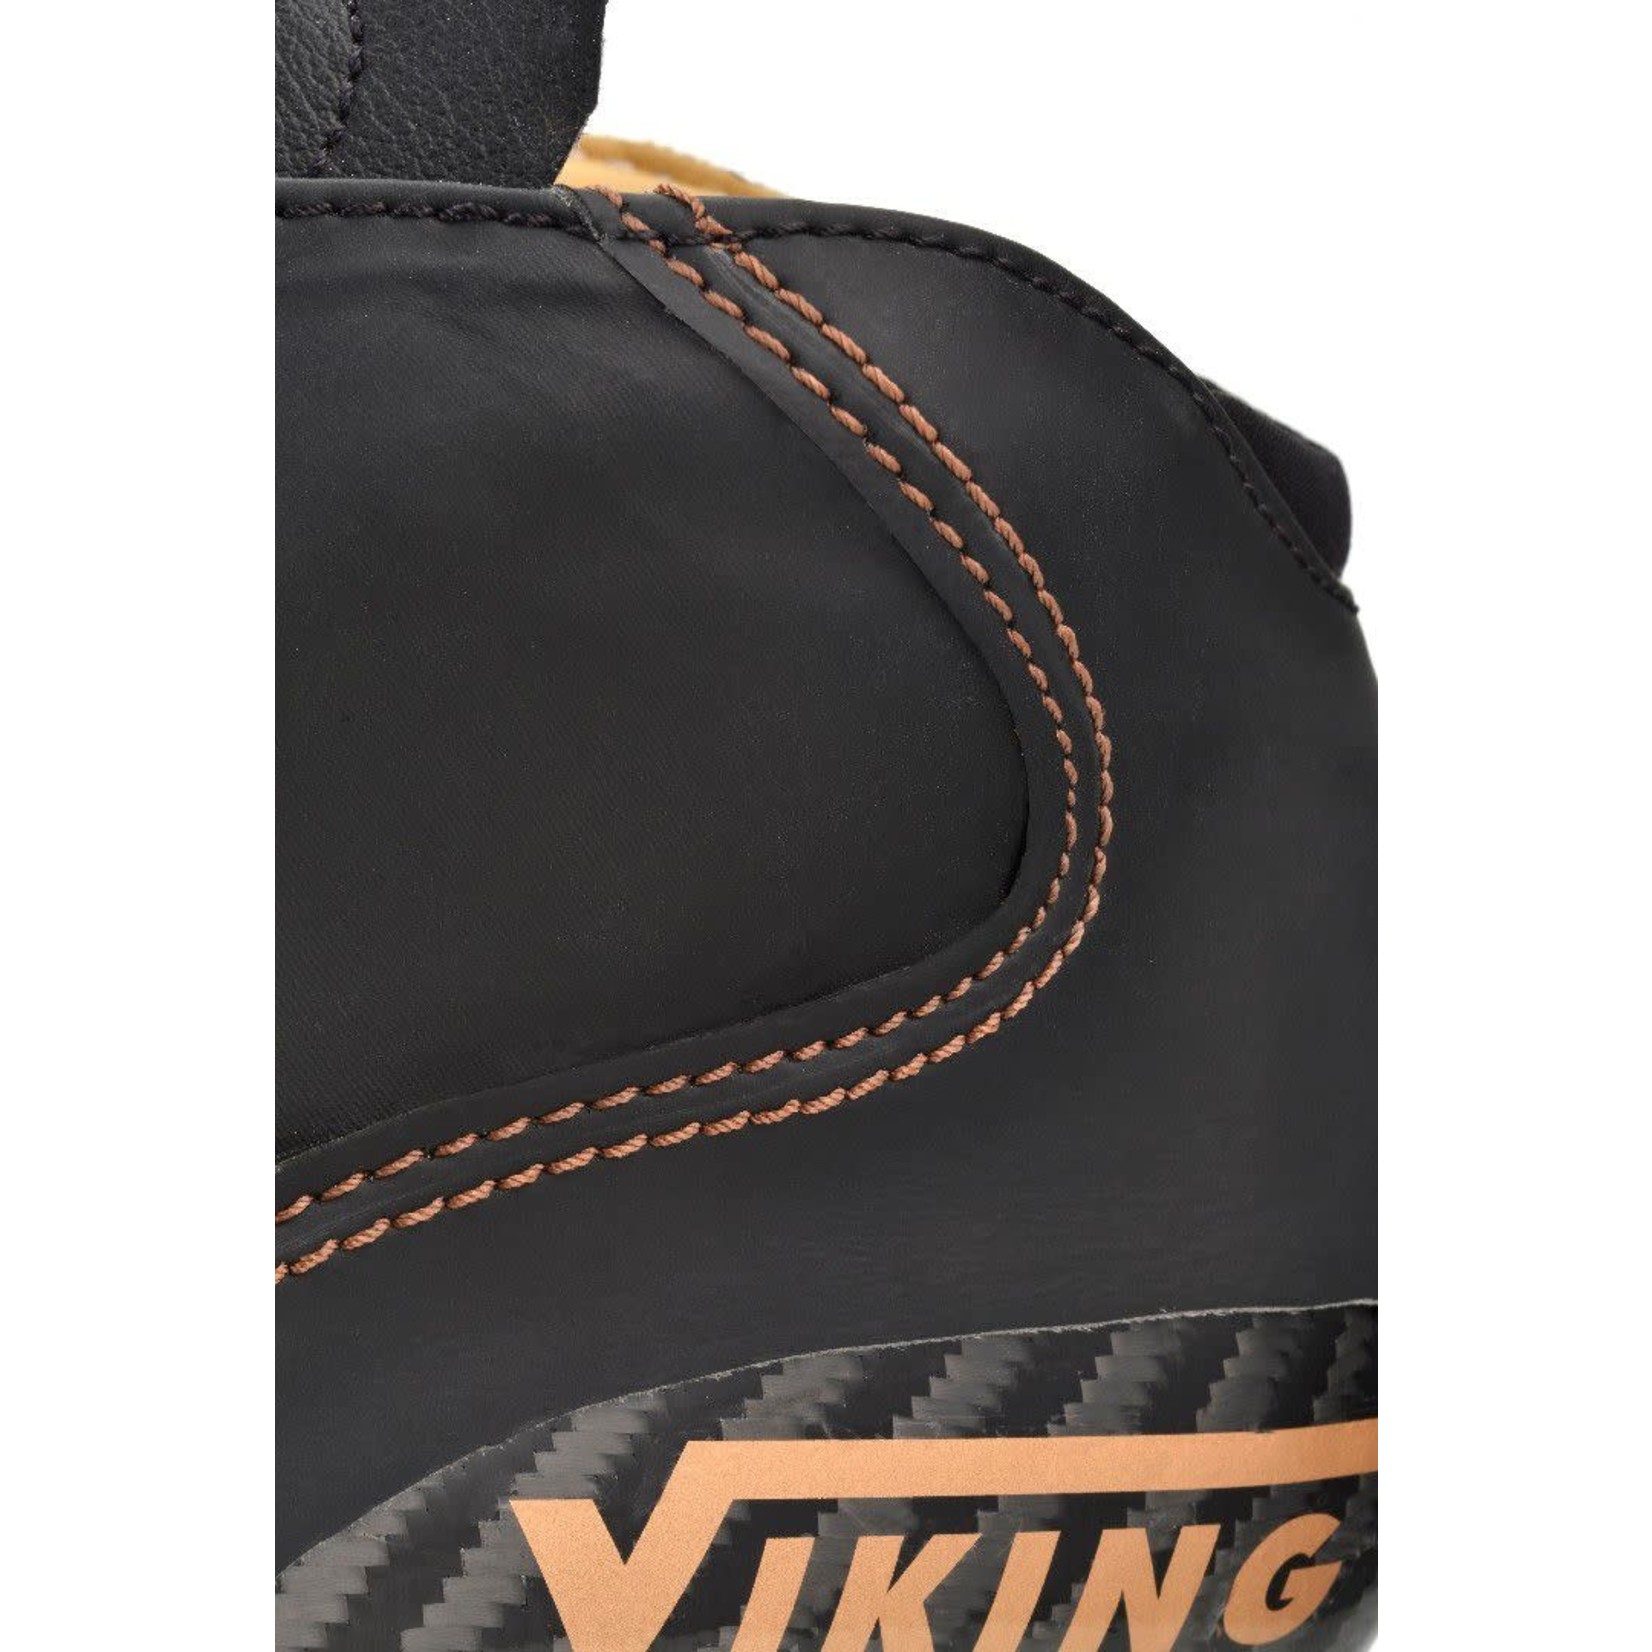 Viking Viking Bronze Schoenen